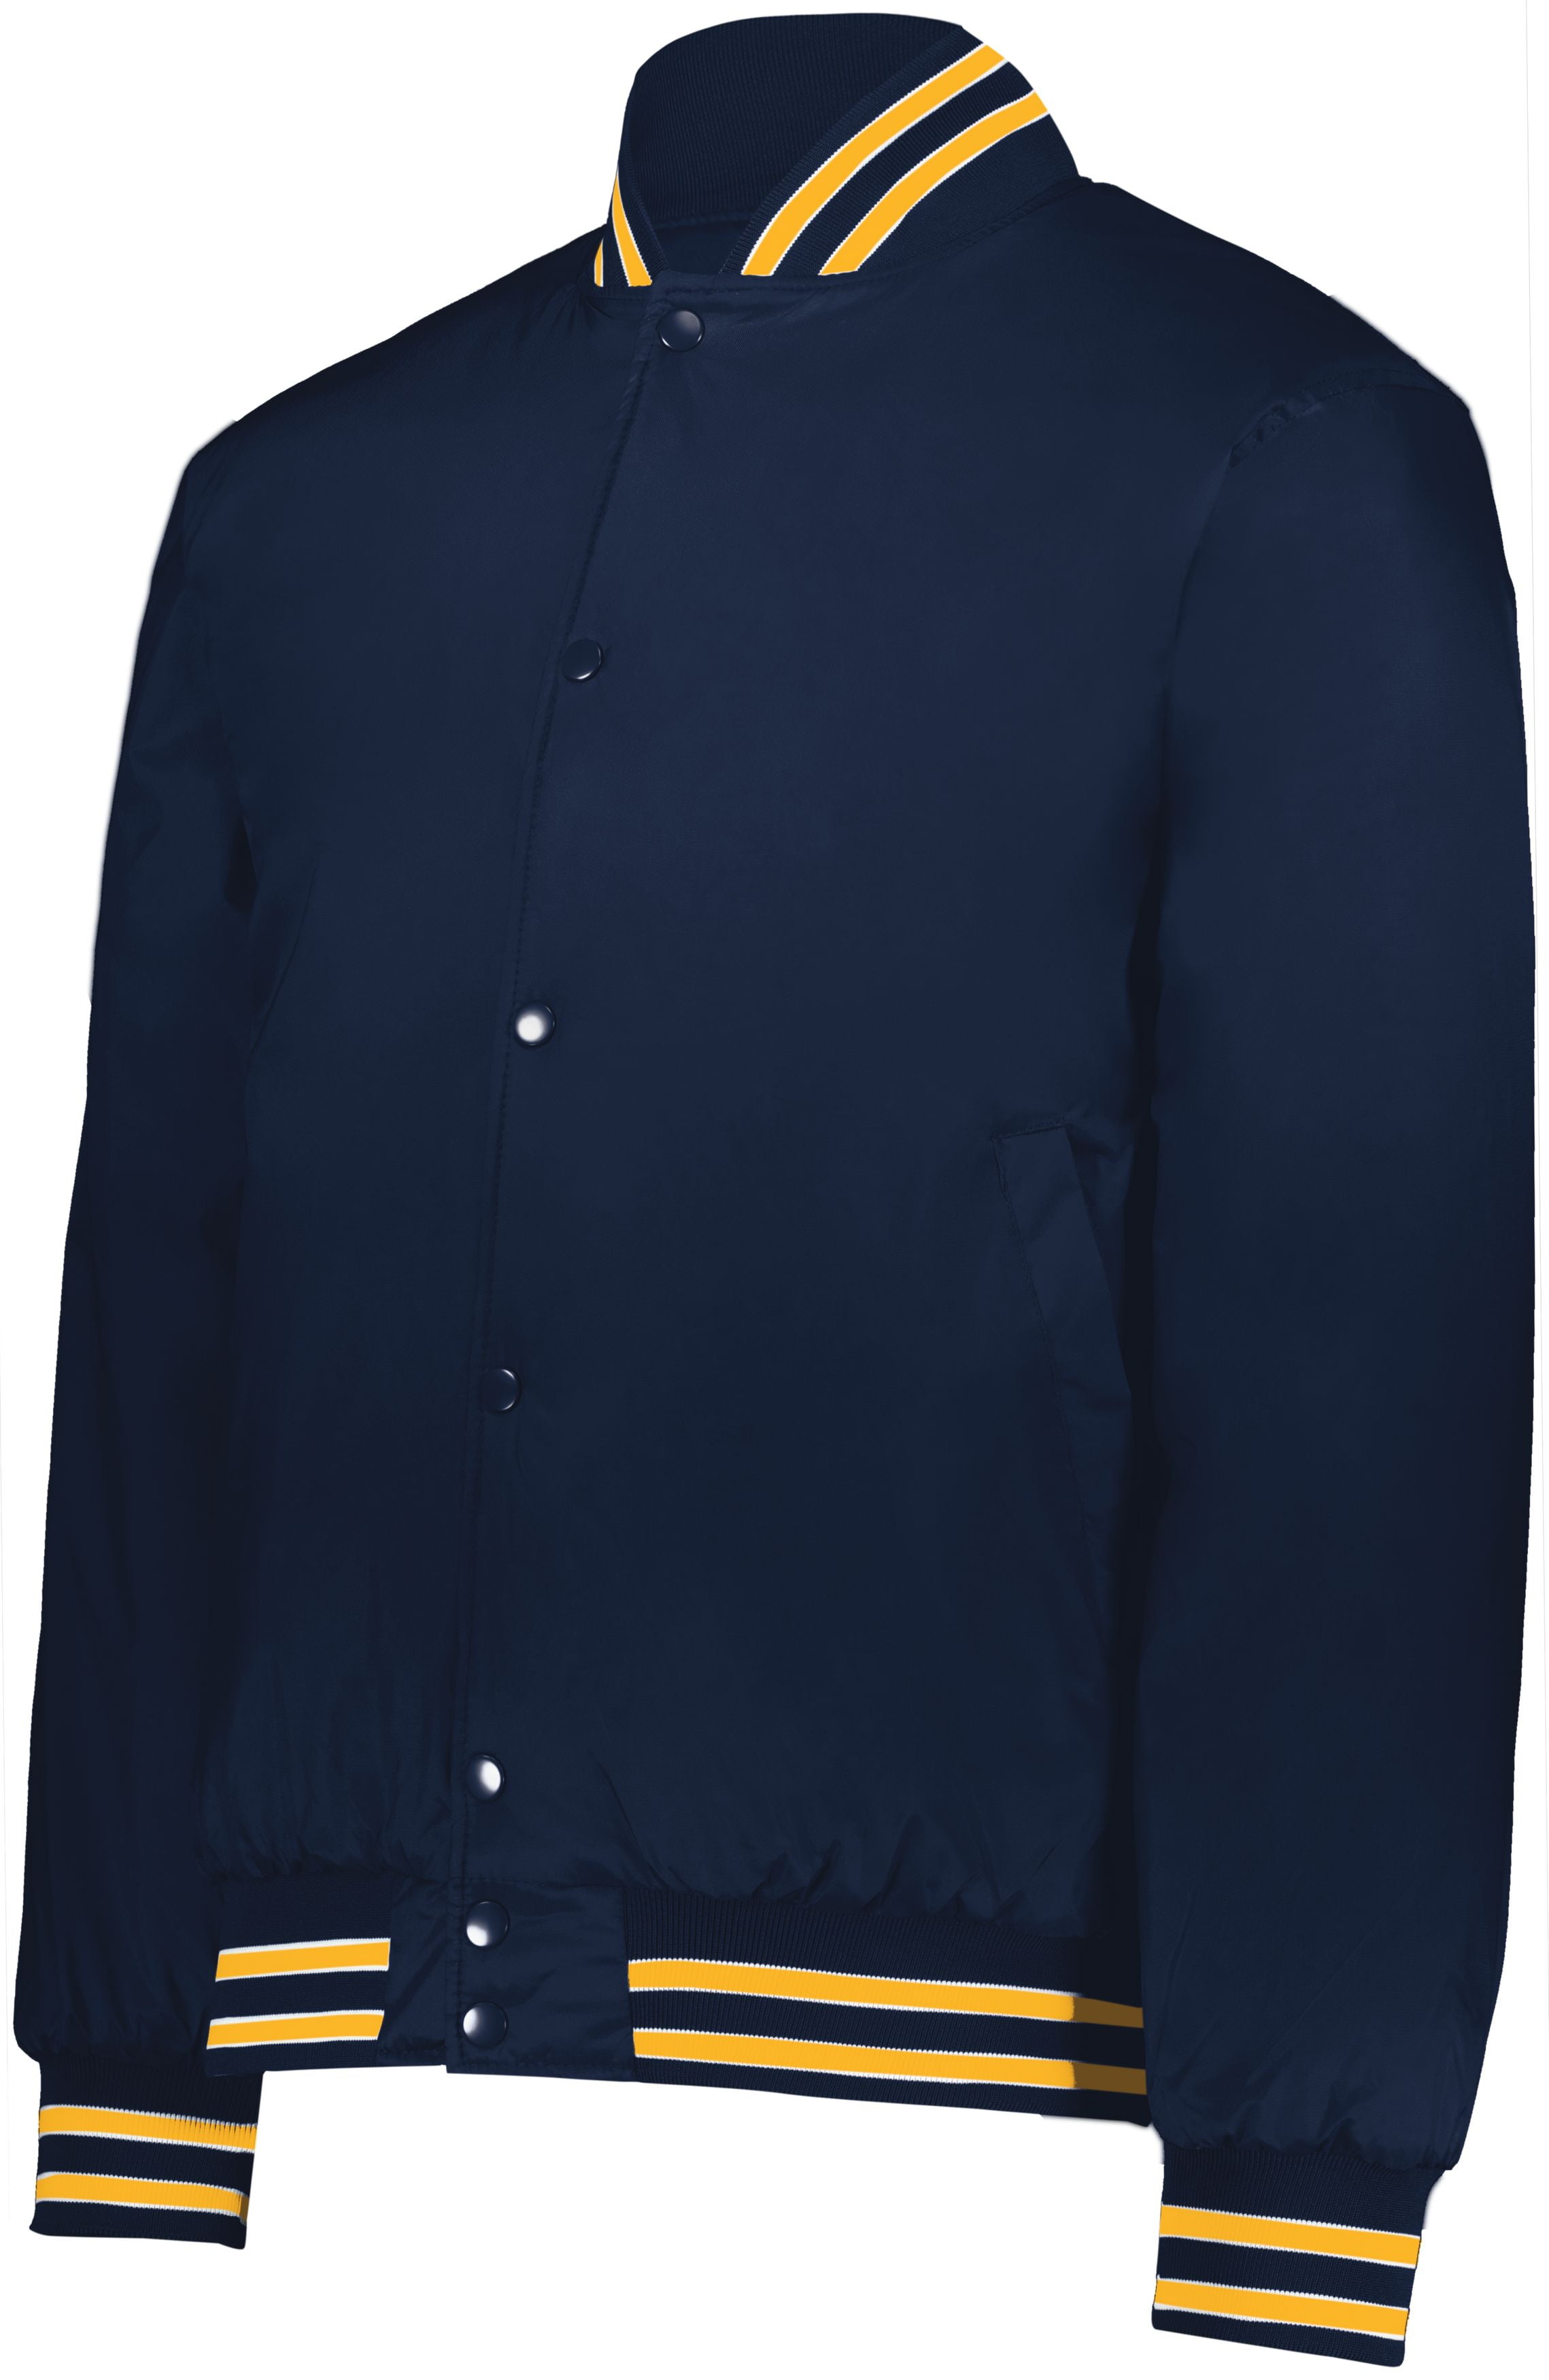 RTRDE Mens Jackets, Casual Lightweight Varsity Bomber Jacket Coat